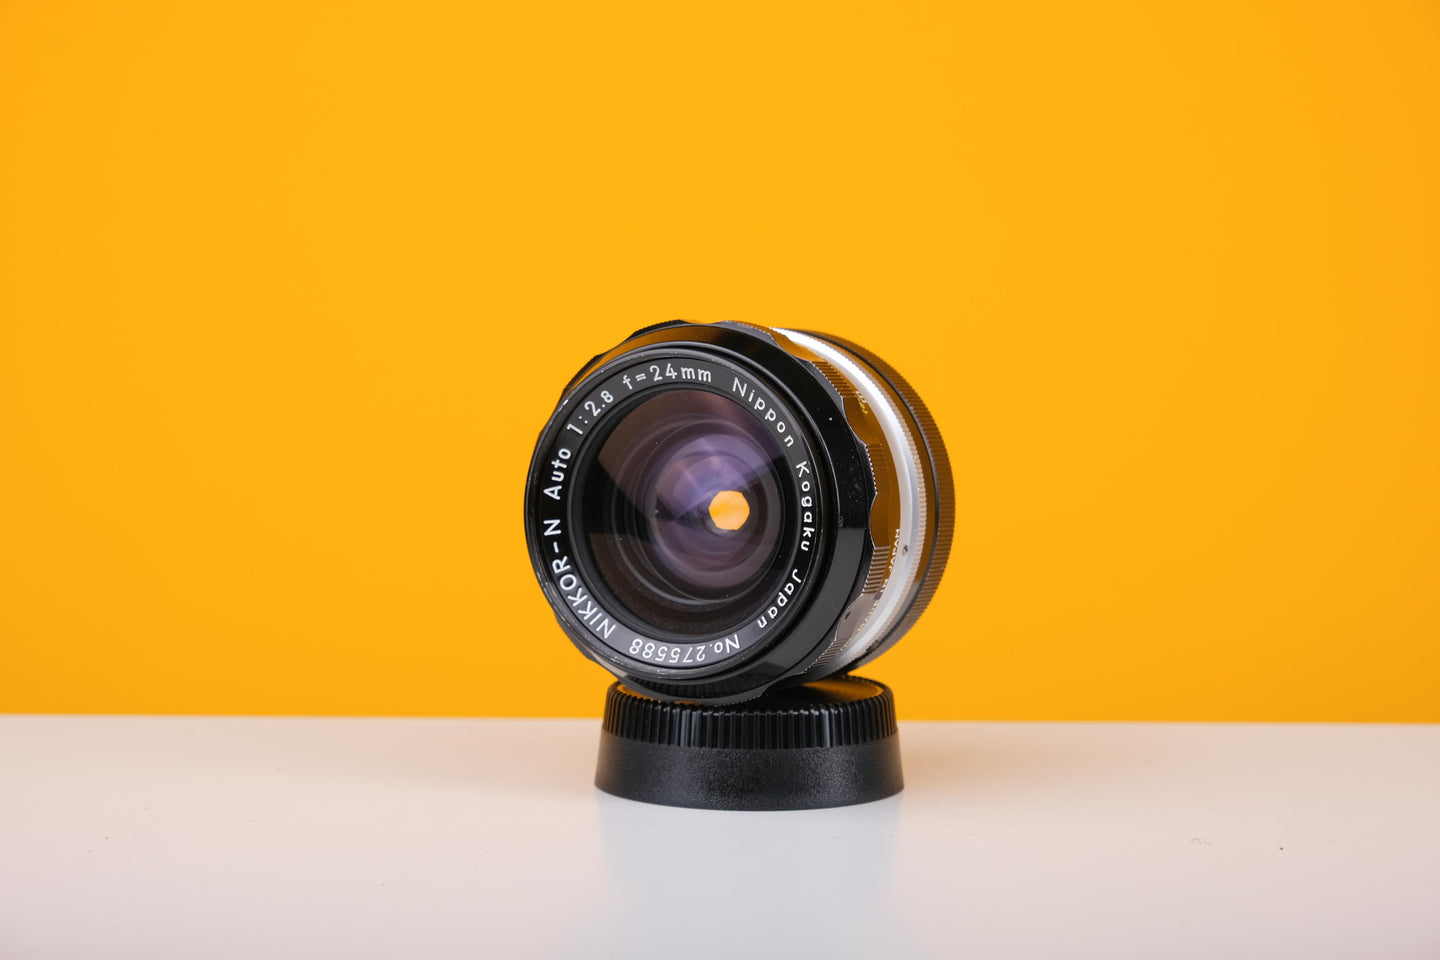 Nikkor-N Auto 24mm f/2.8 Pre AI Lens